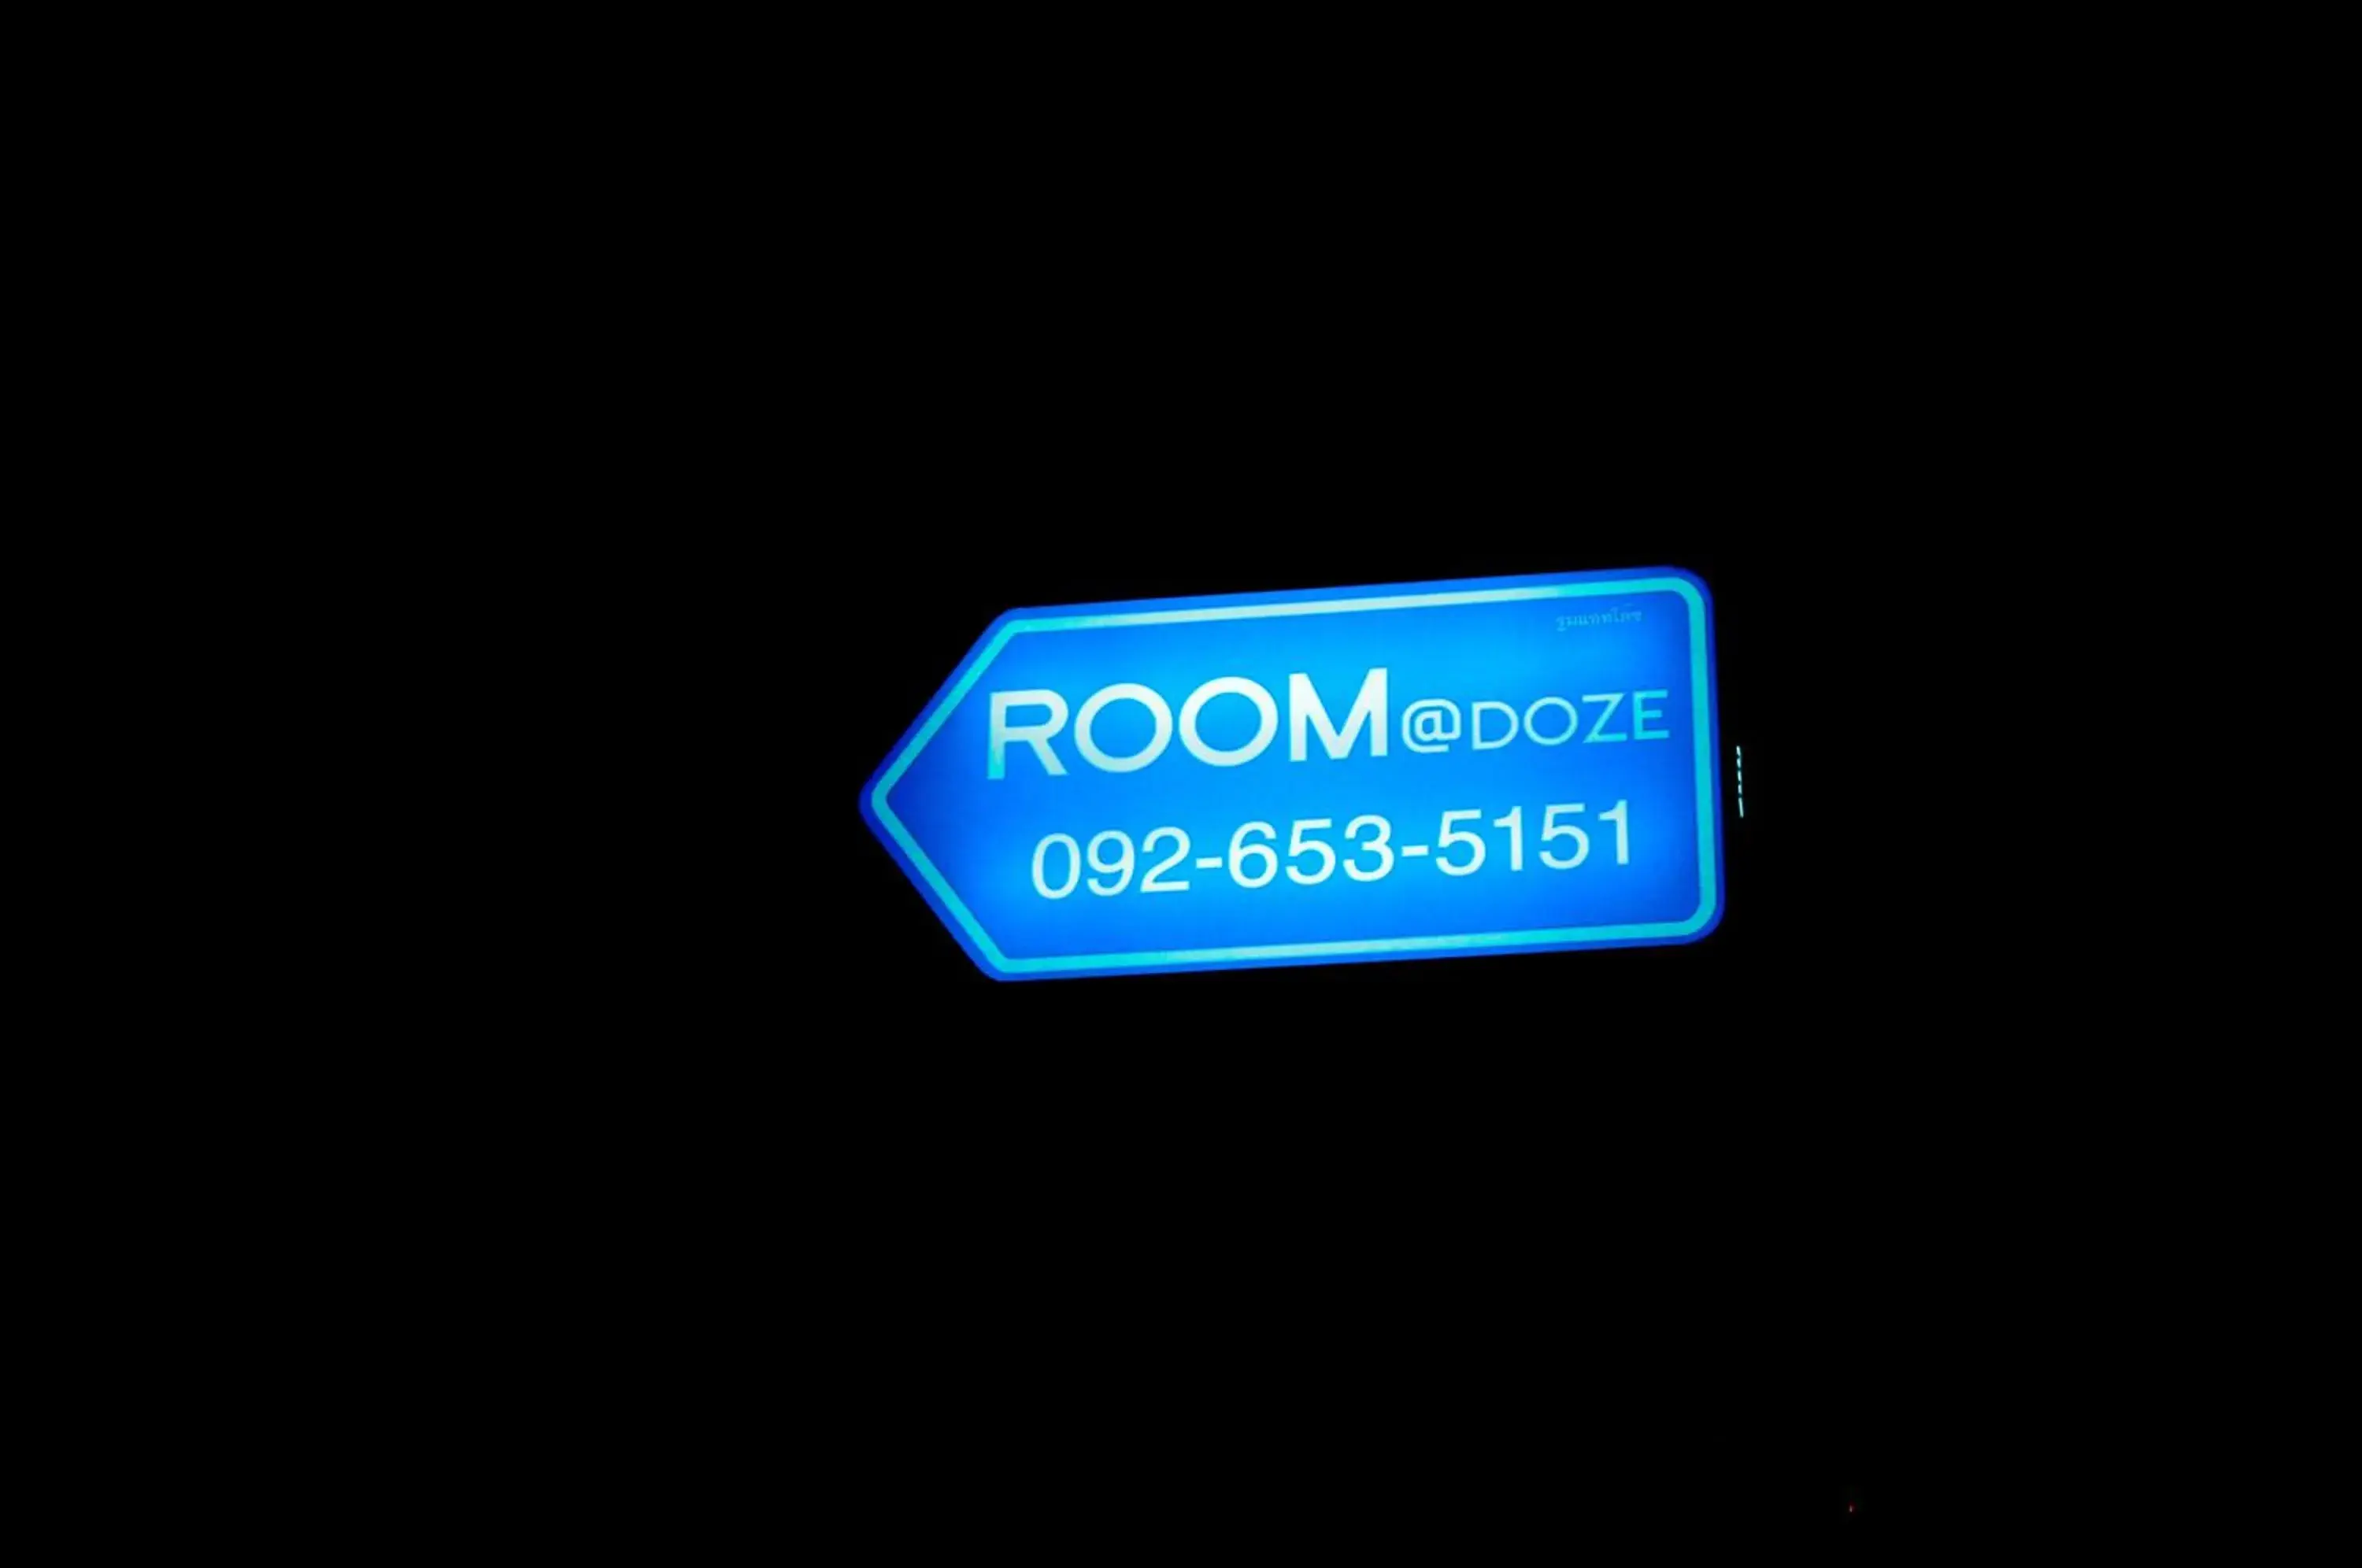 Property logo or sign in Room@Doze